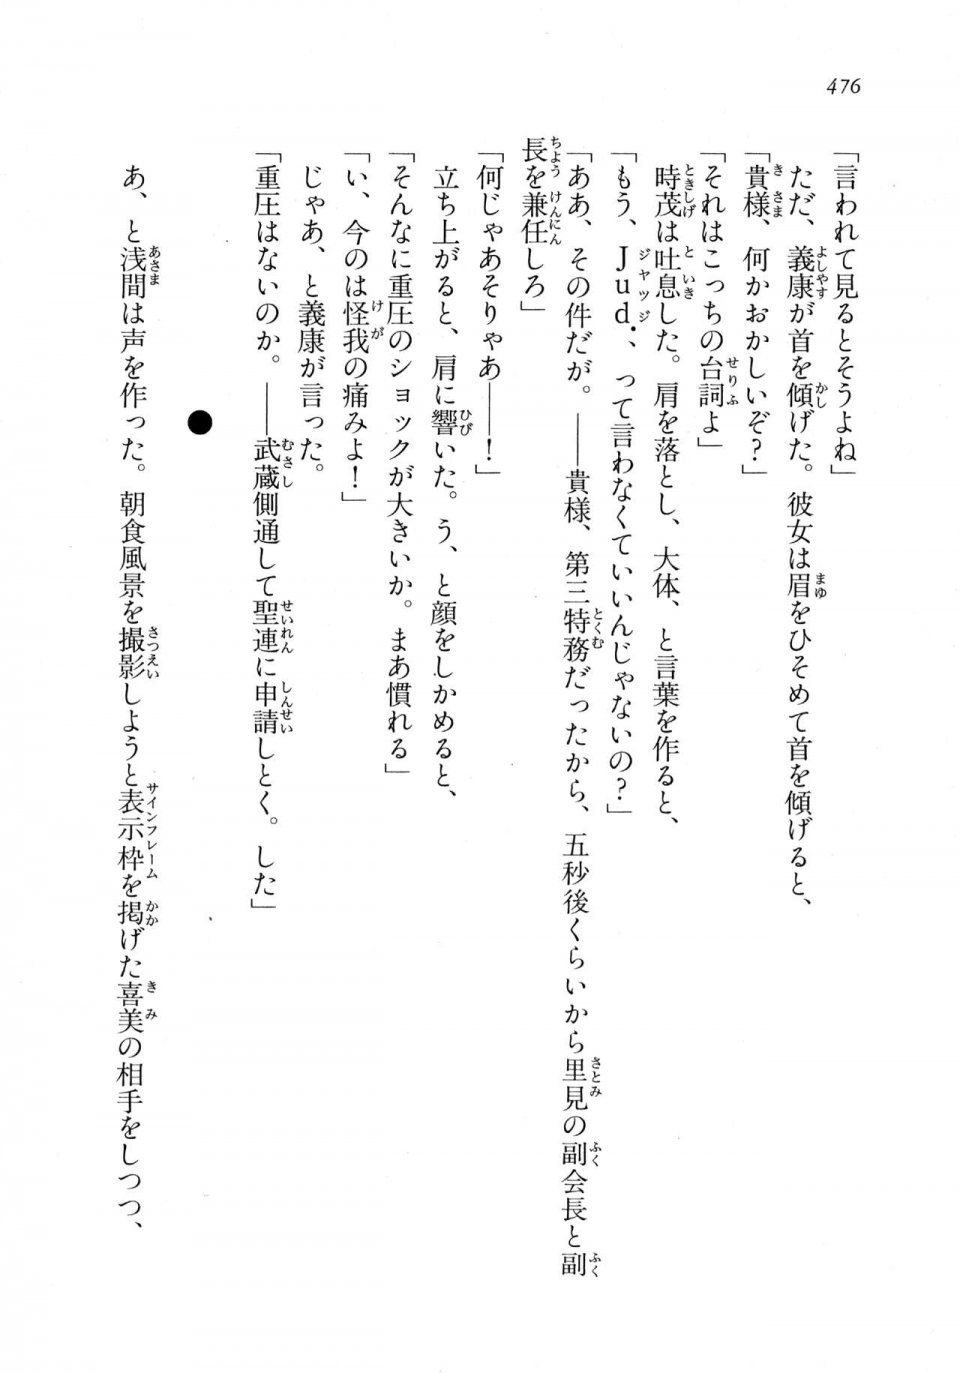 Kyoukai Senjou no Horizon LN Vol 18(7C) Part 1 - Photo #476